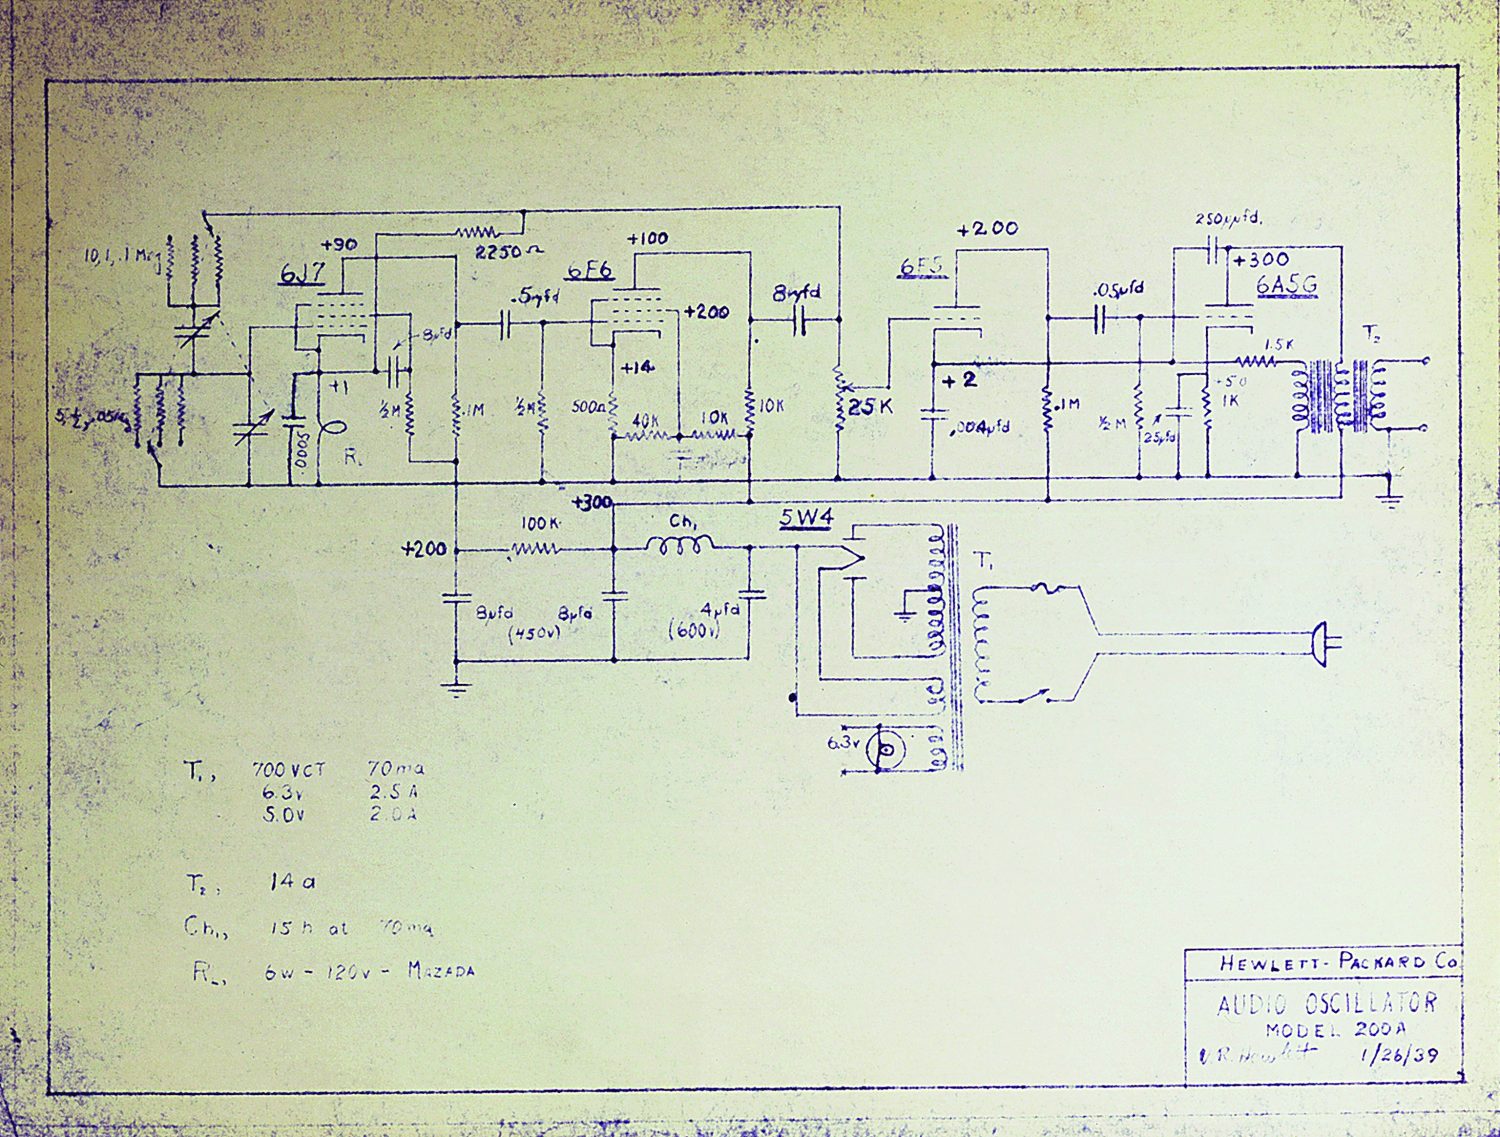 Schematic for the HP 200A audio oscillator.